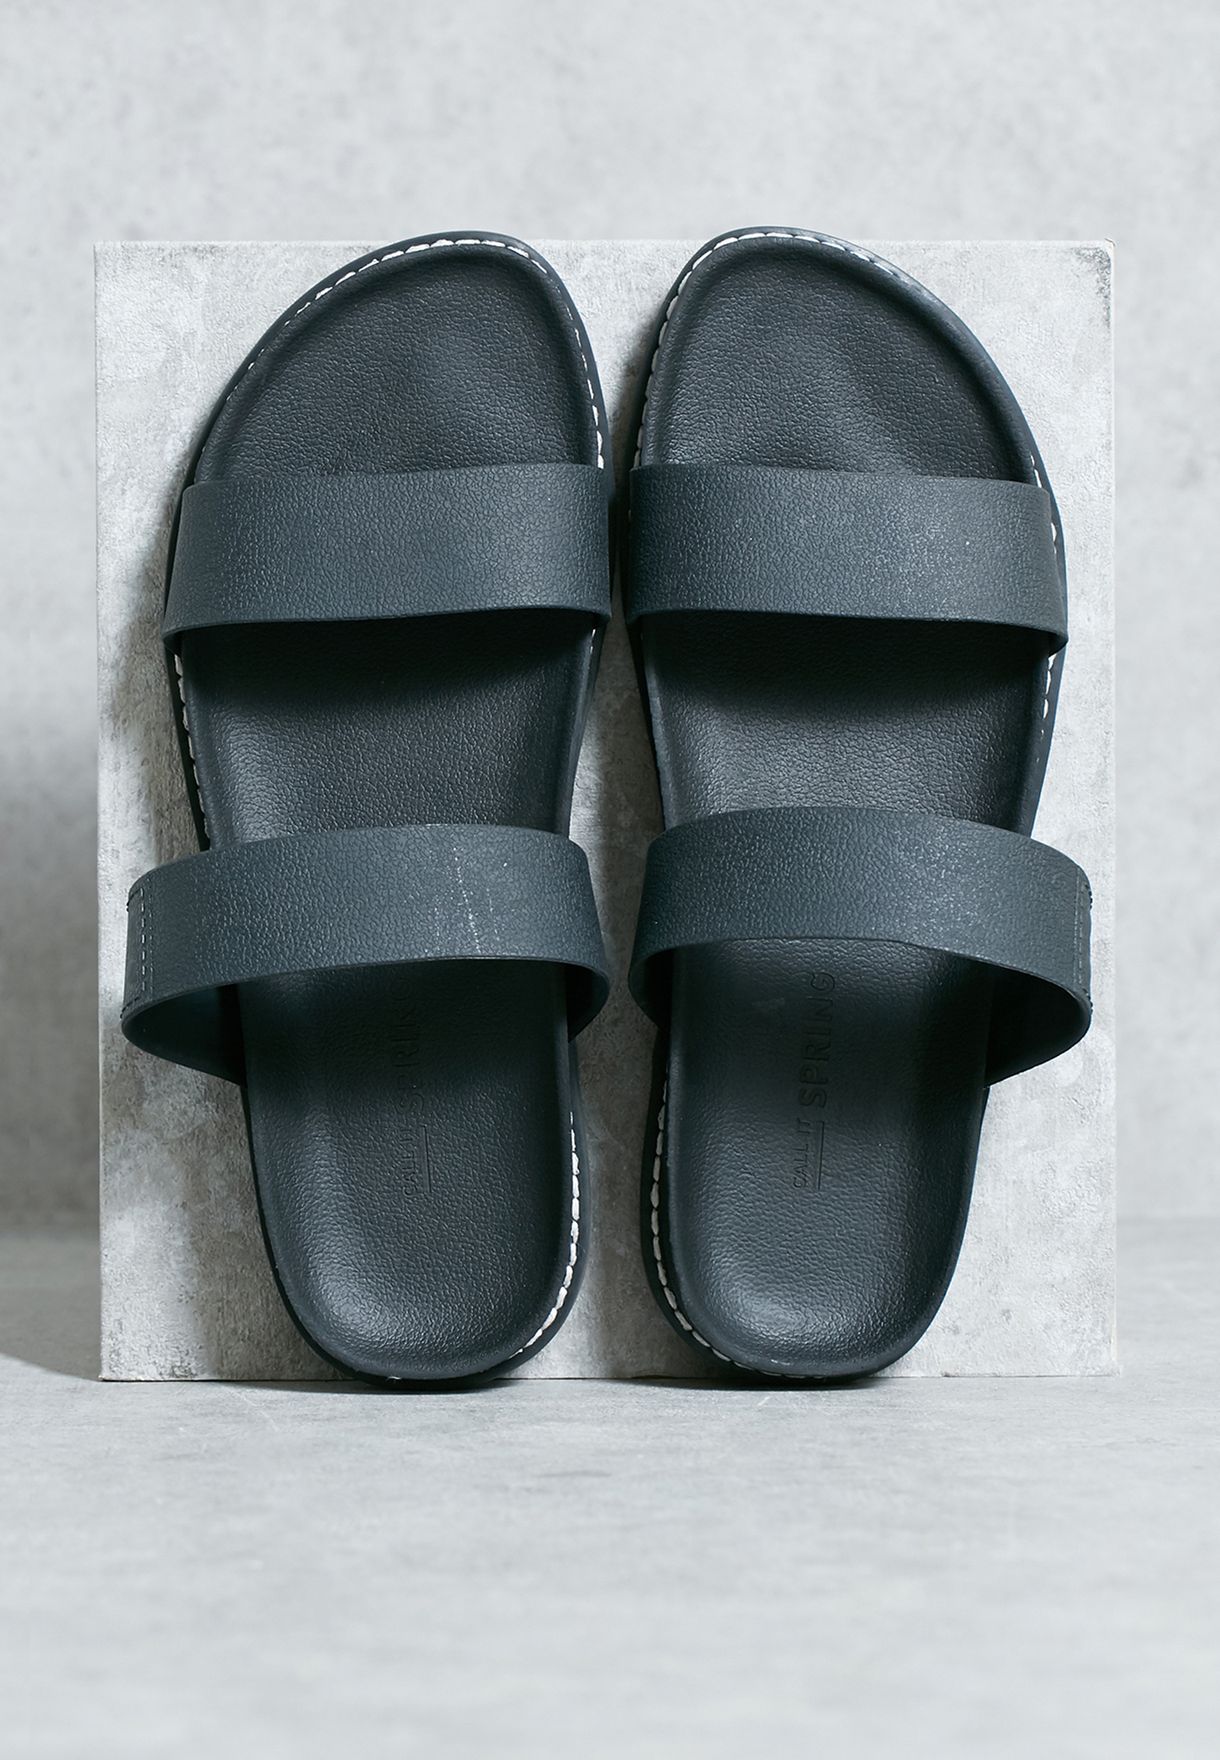 black casual sandals